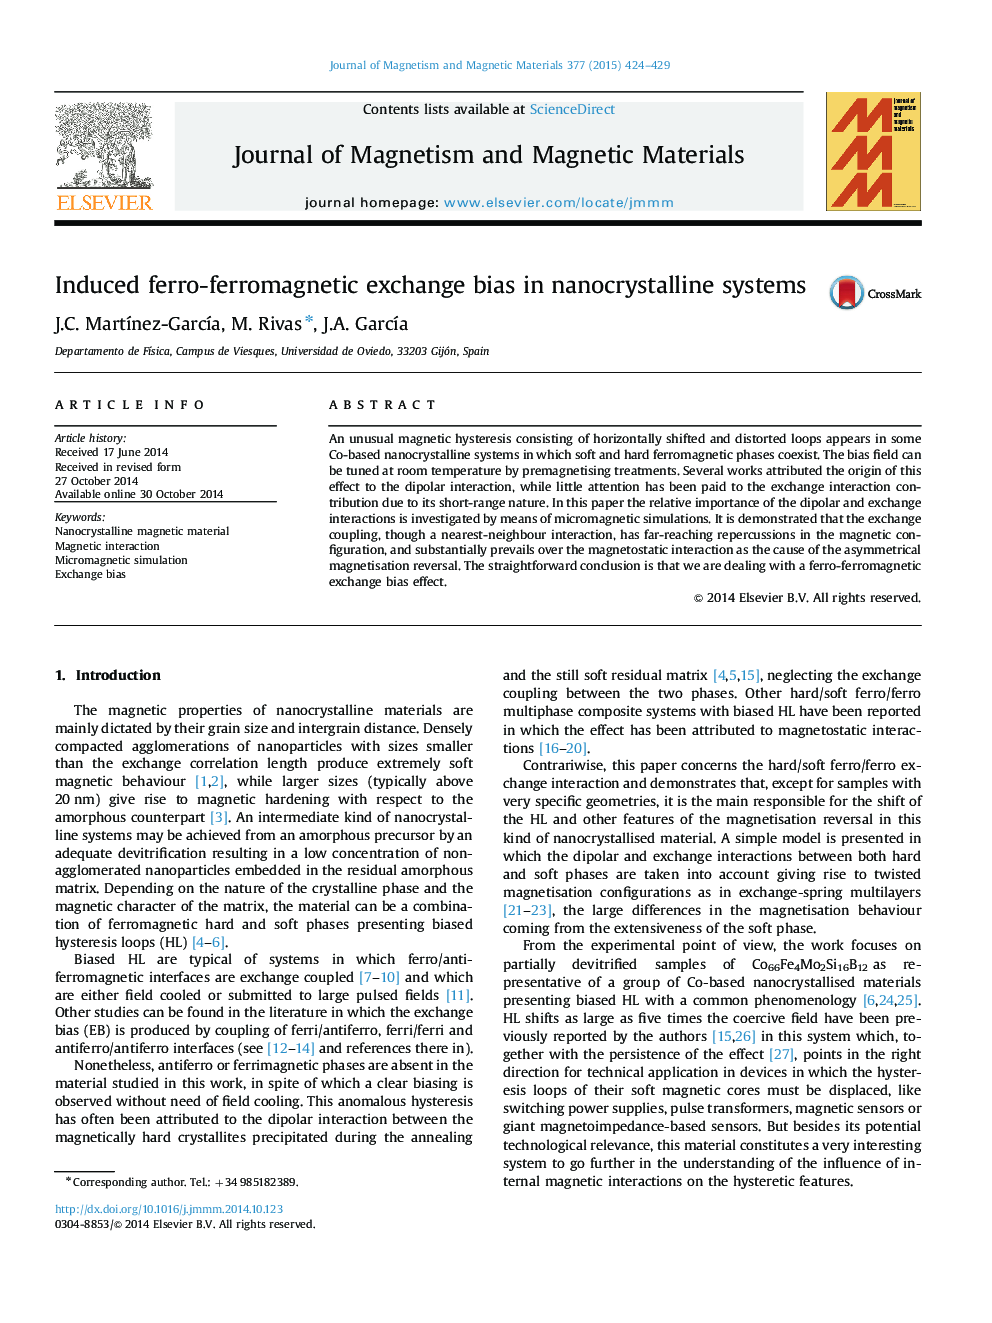 Induced ferro-ferromagnetic exchange bias in nanocrystalline systems